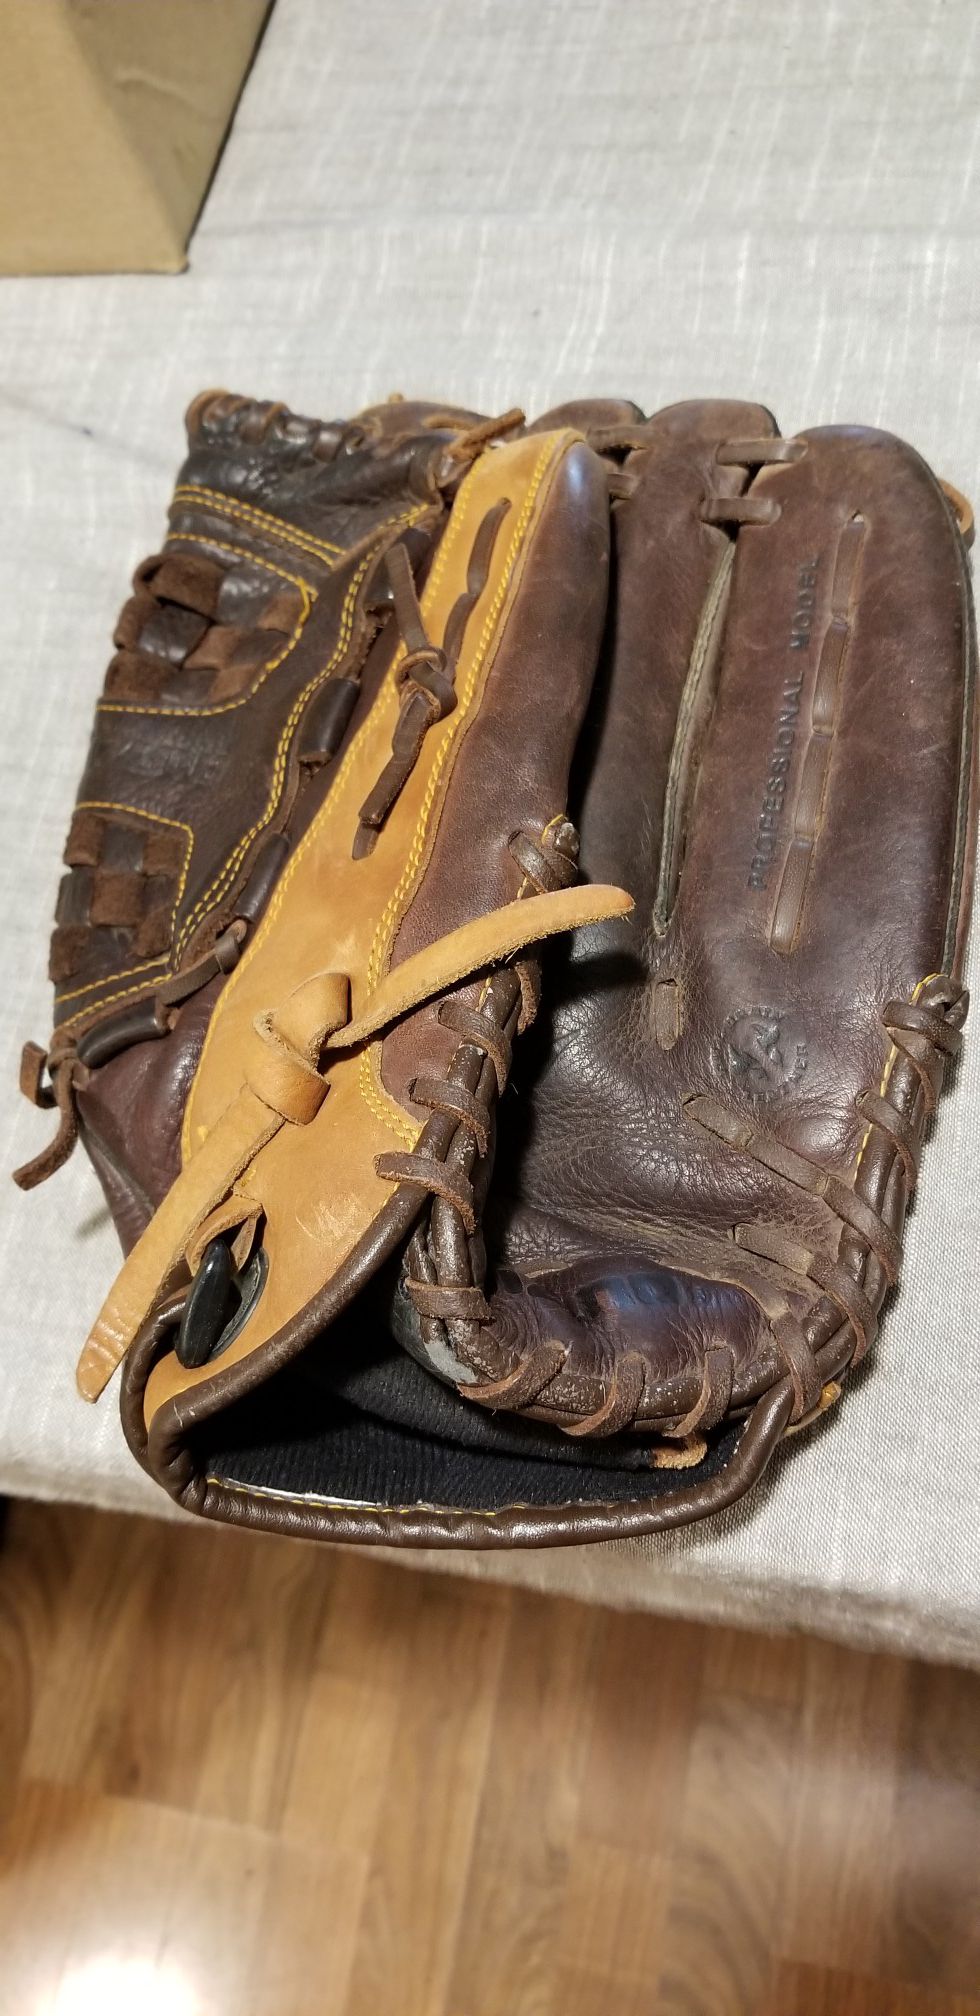 14" Mizuno baseball softball glove broken in